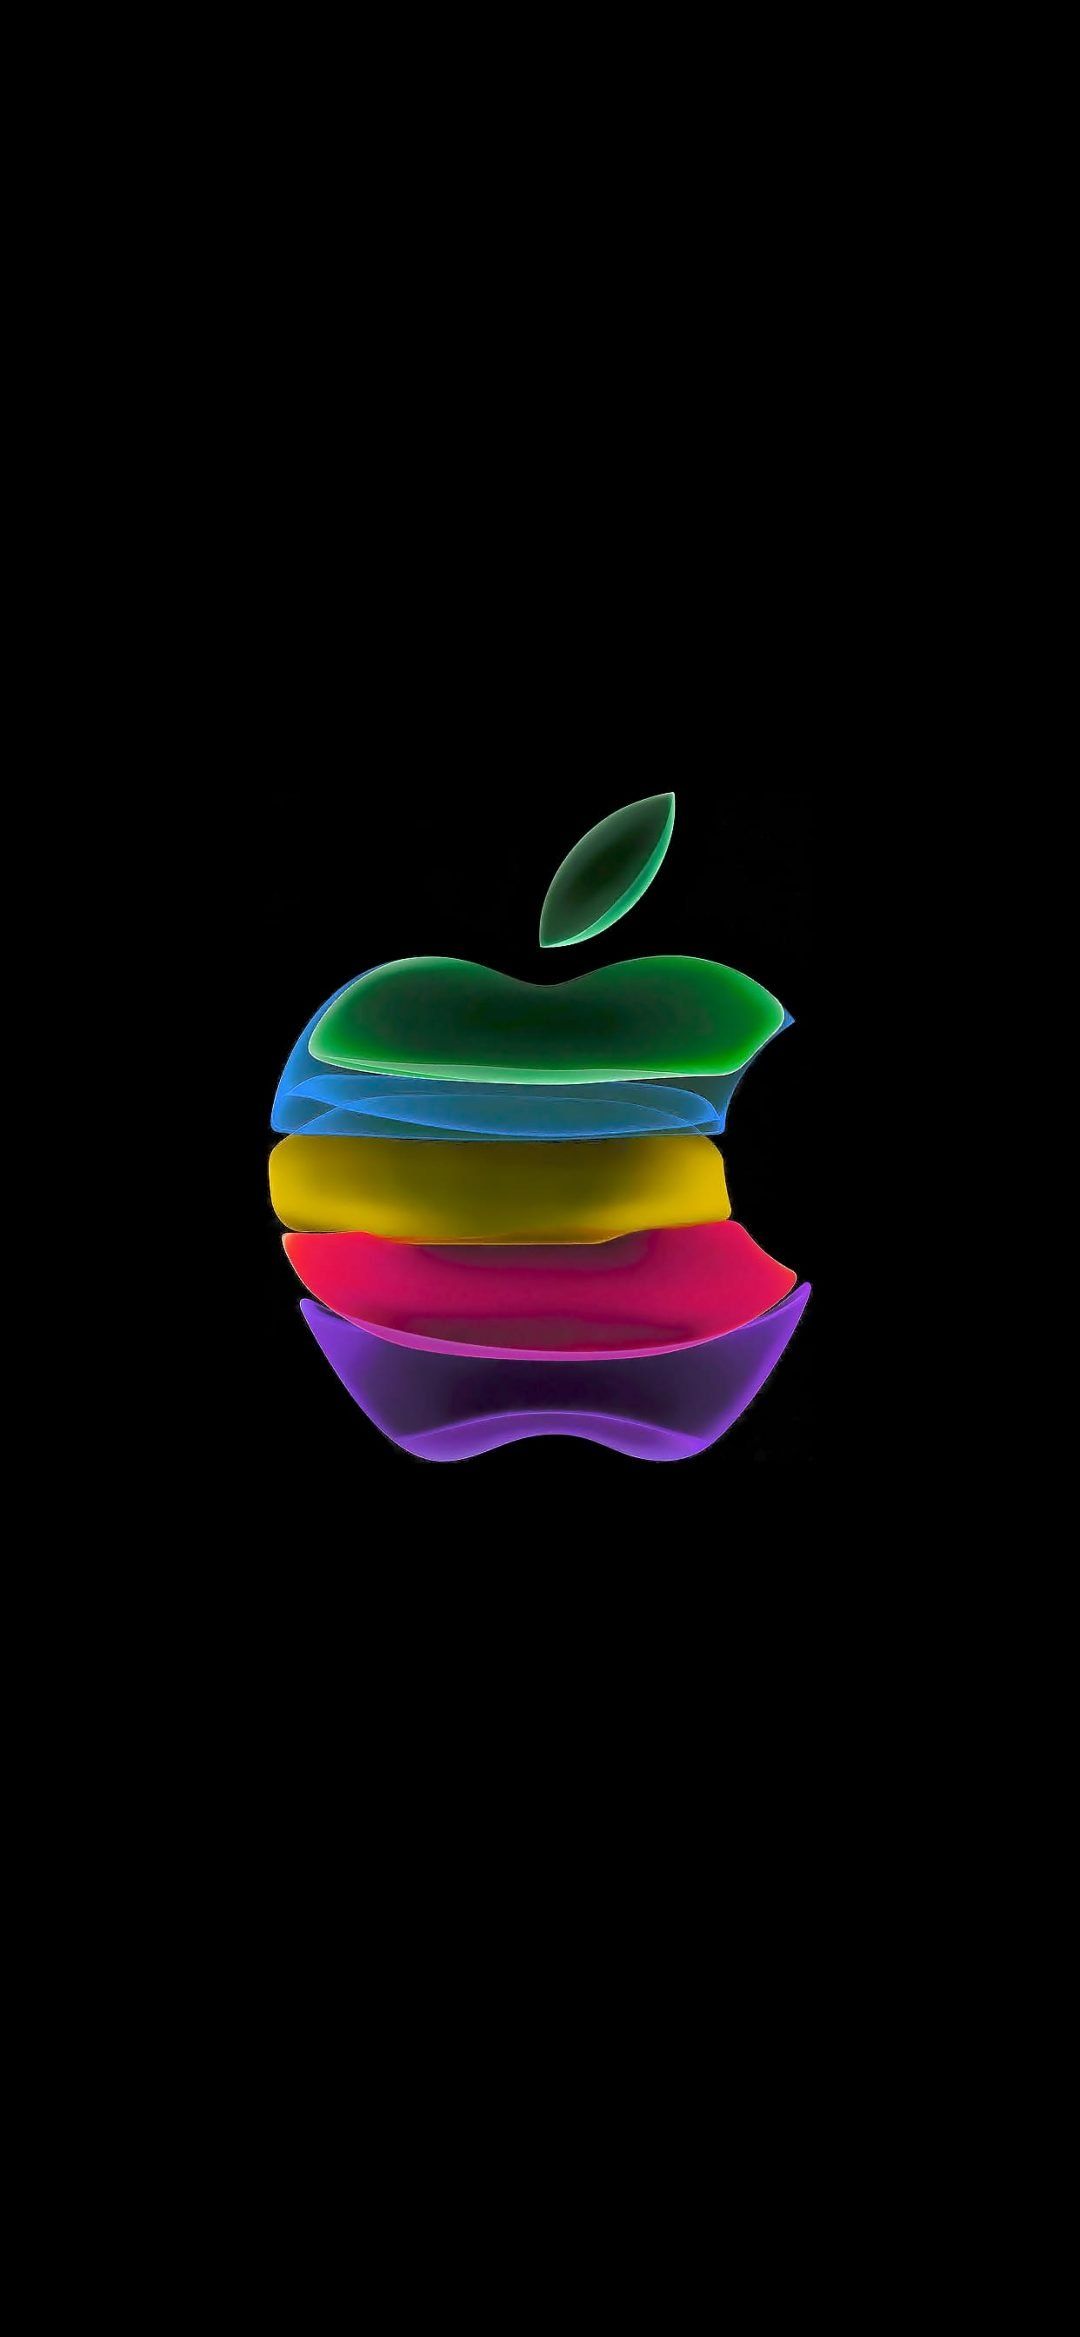 iPhone 11 Apple Logo Wallpaper Free iPhone 11 Apple Logo Background